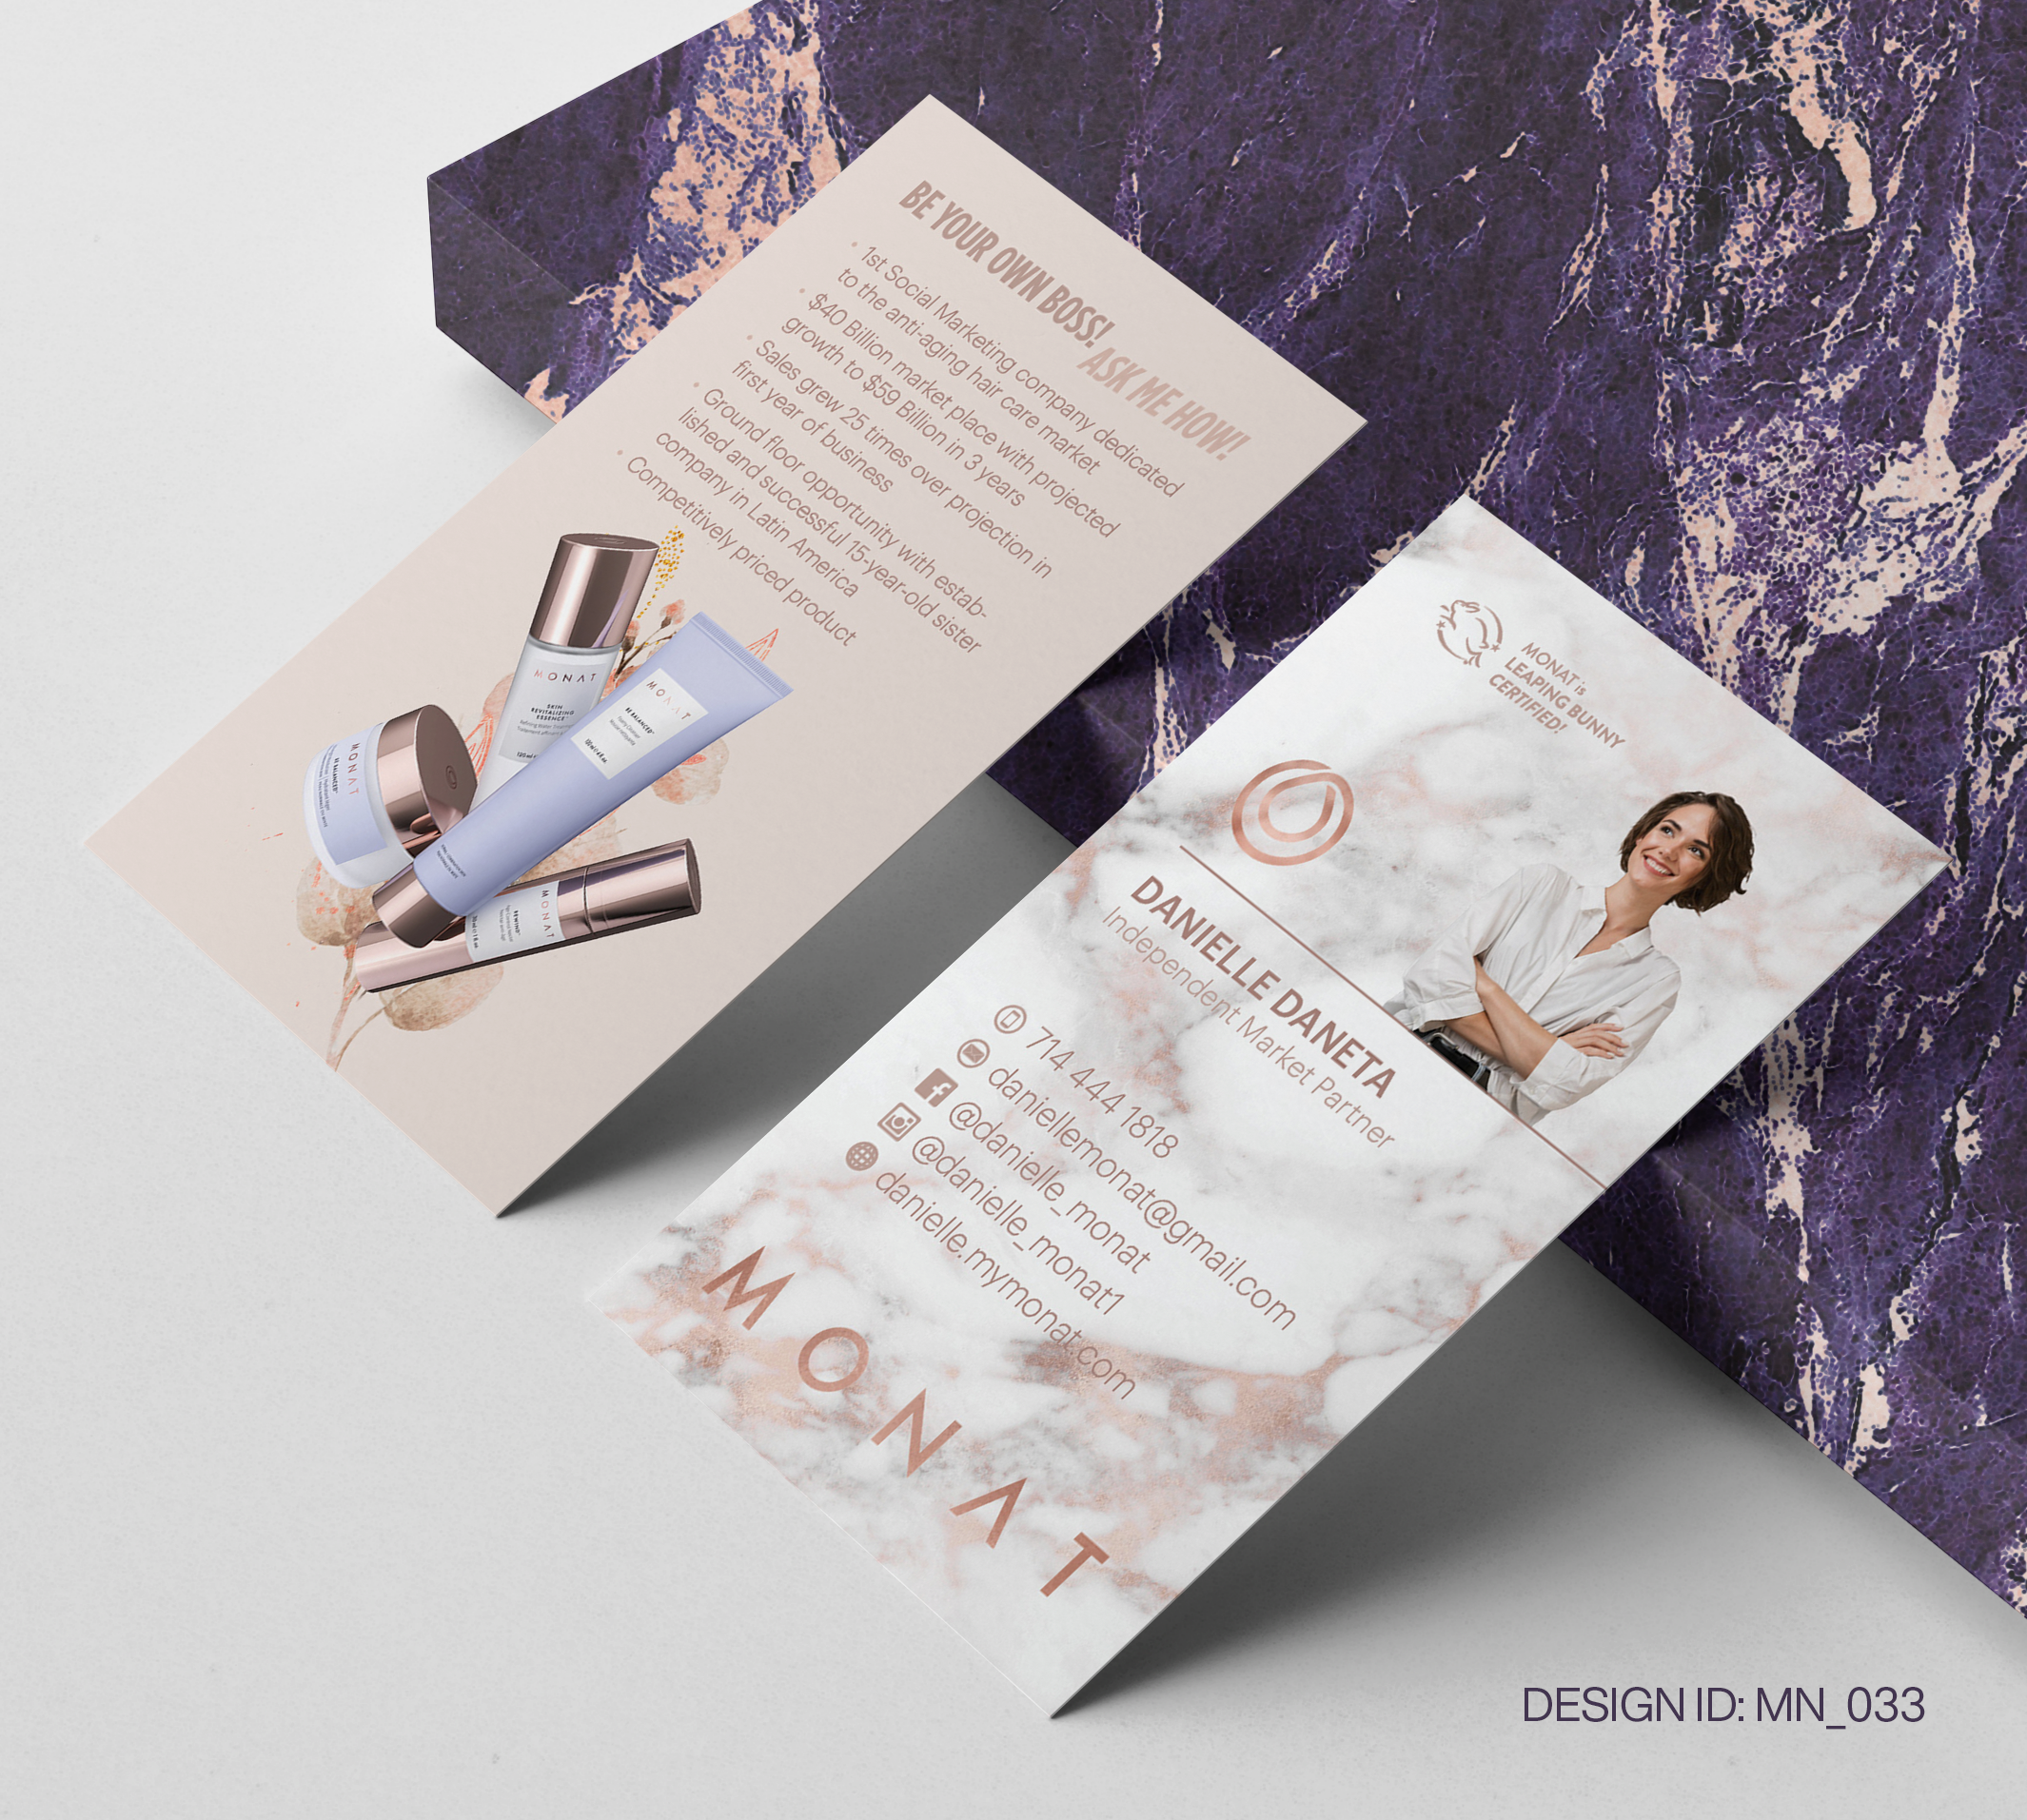 Monat Business Card Design 033